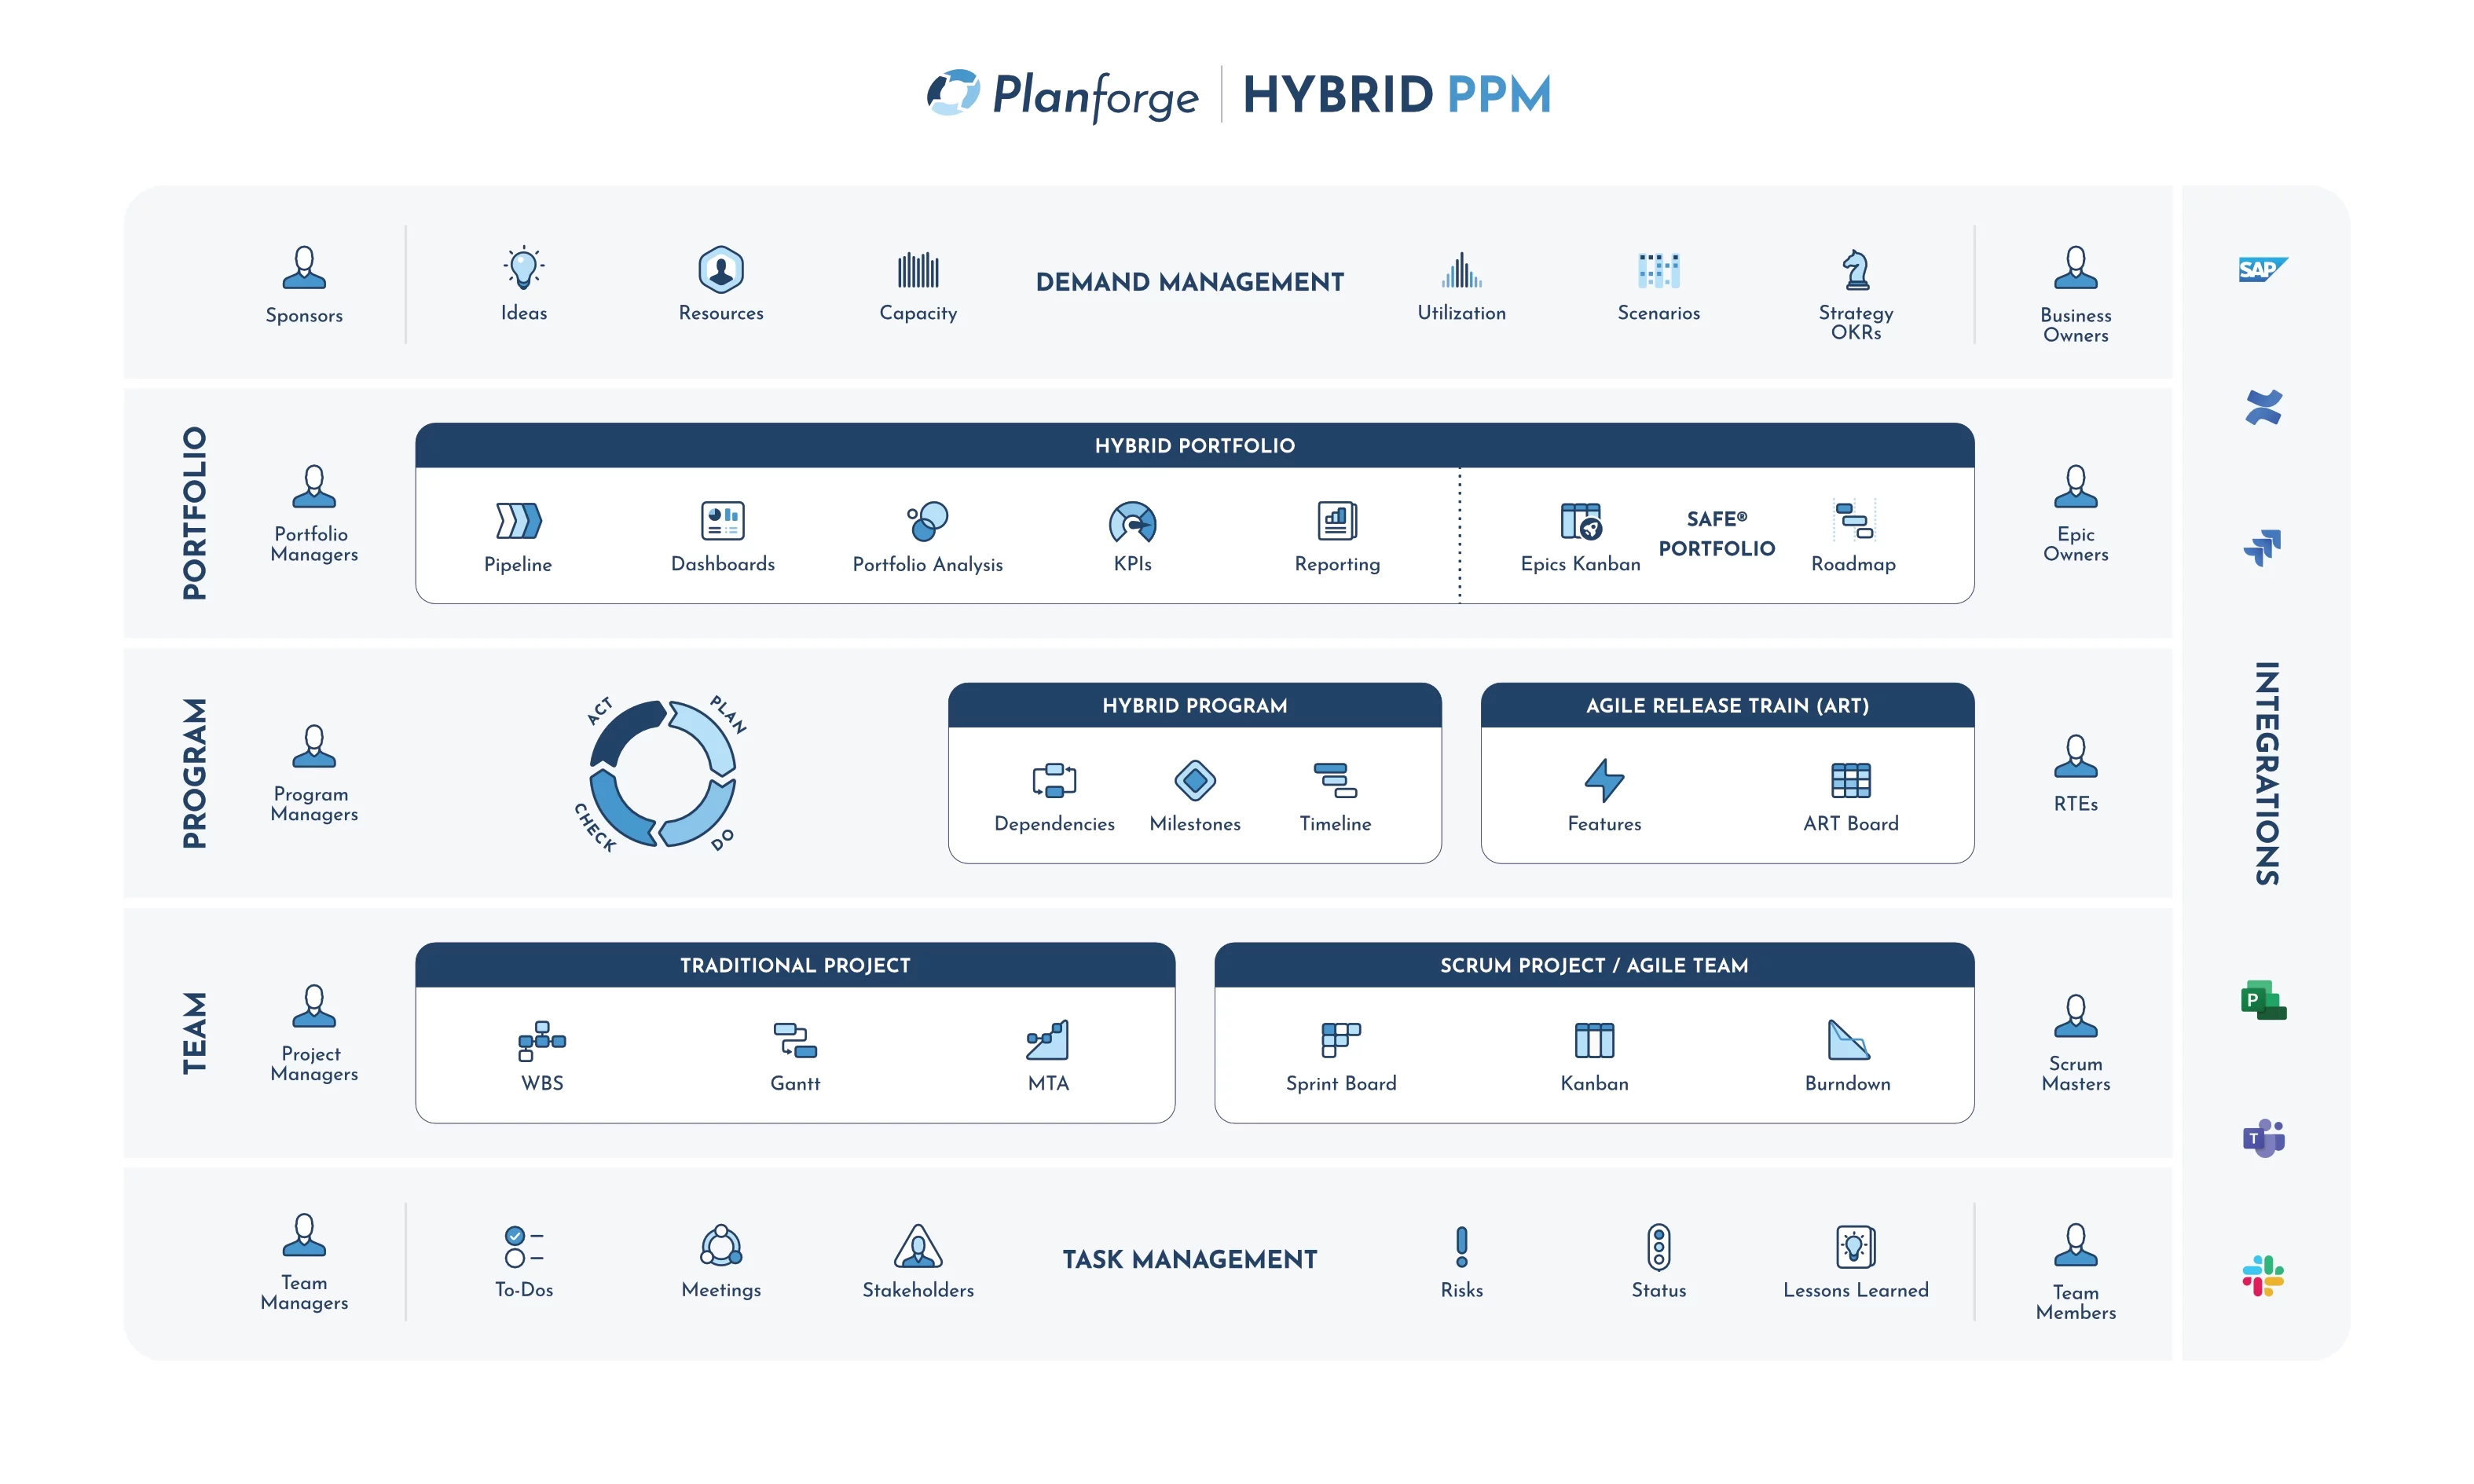 Planforge Platform Capabilities Overview